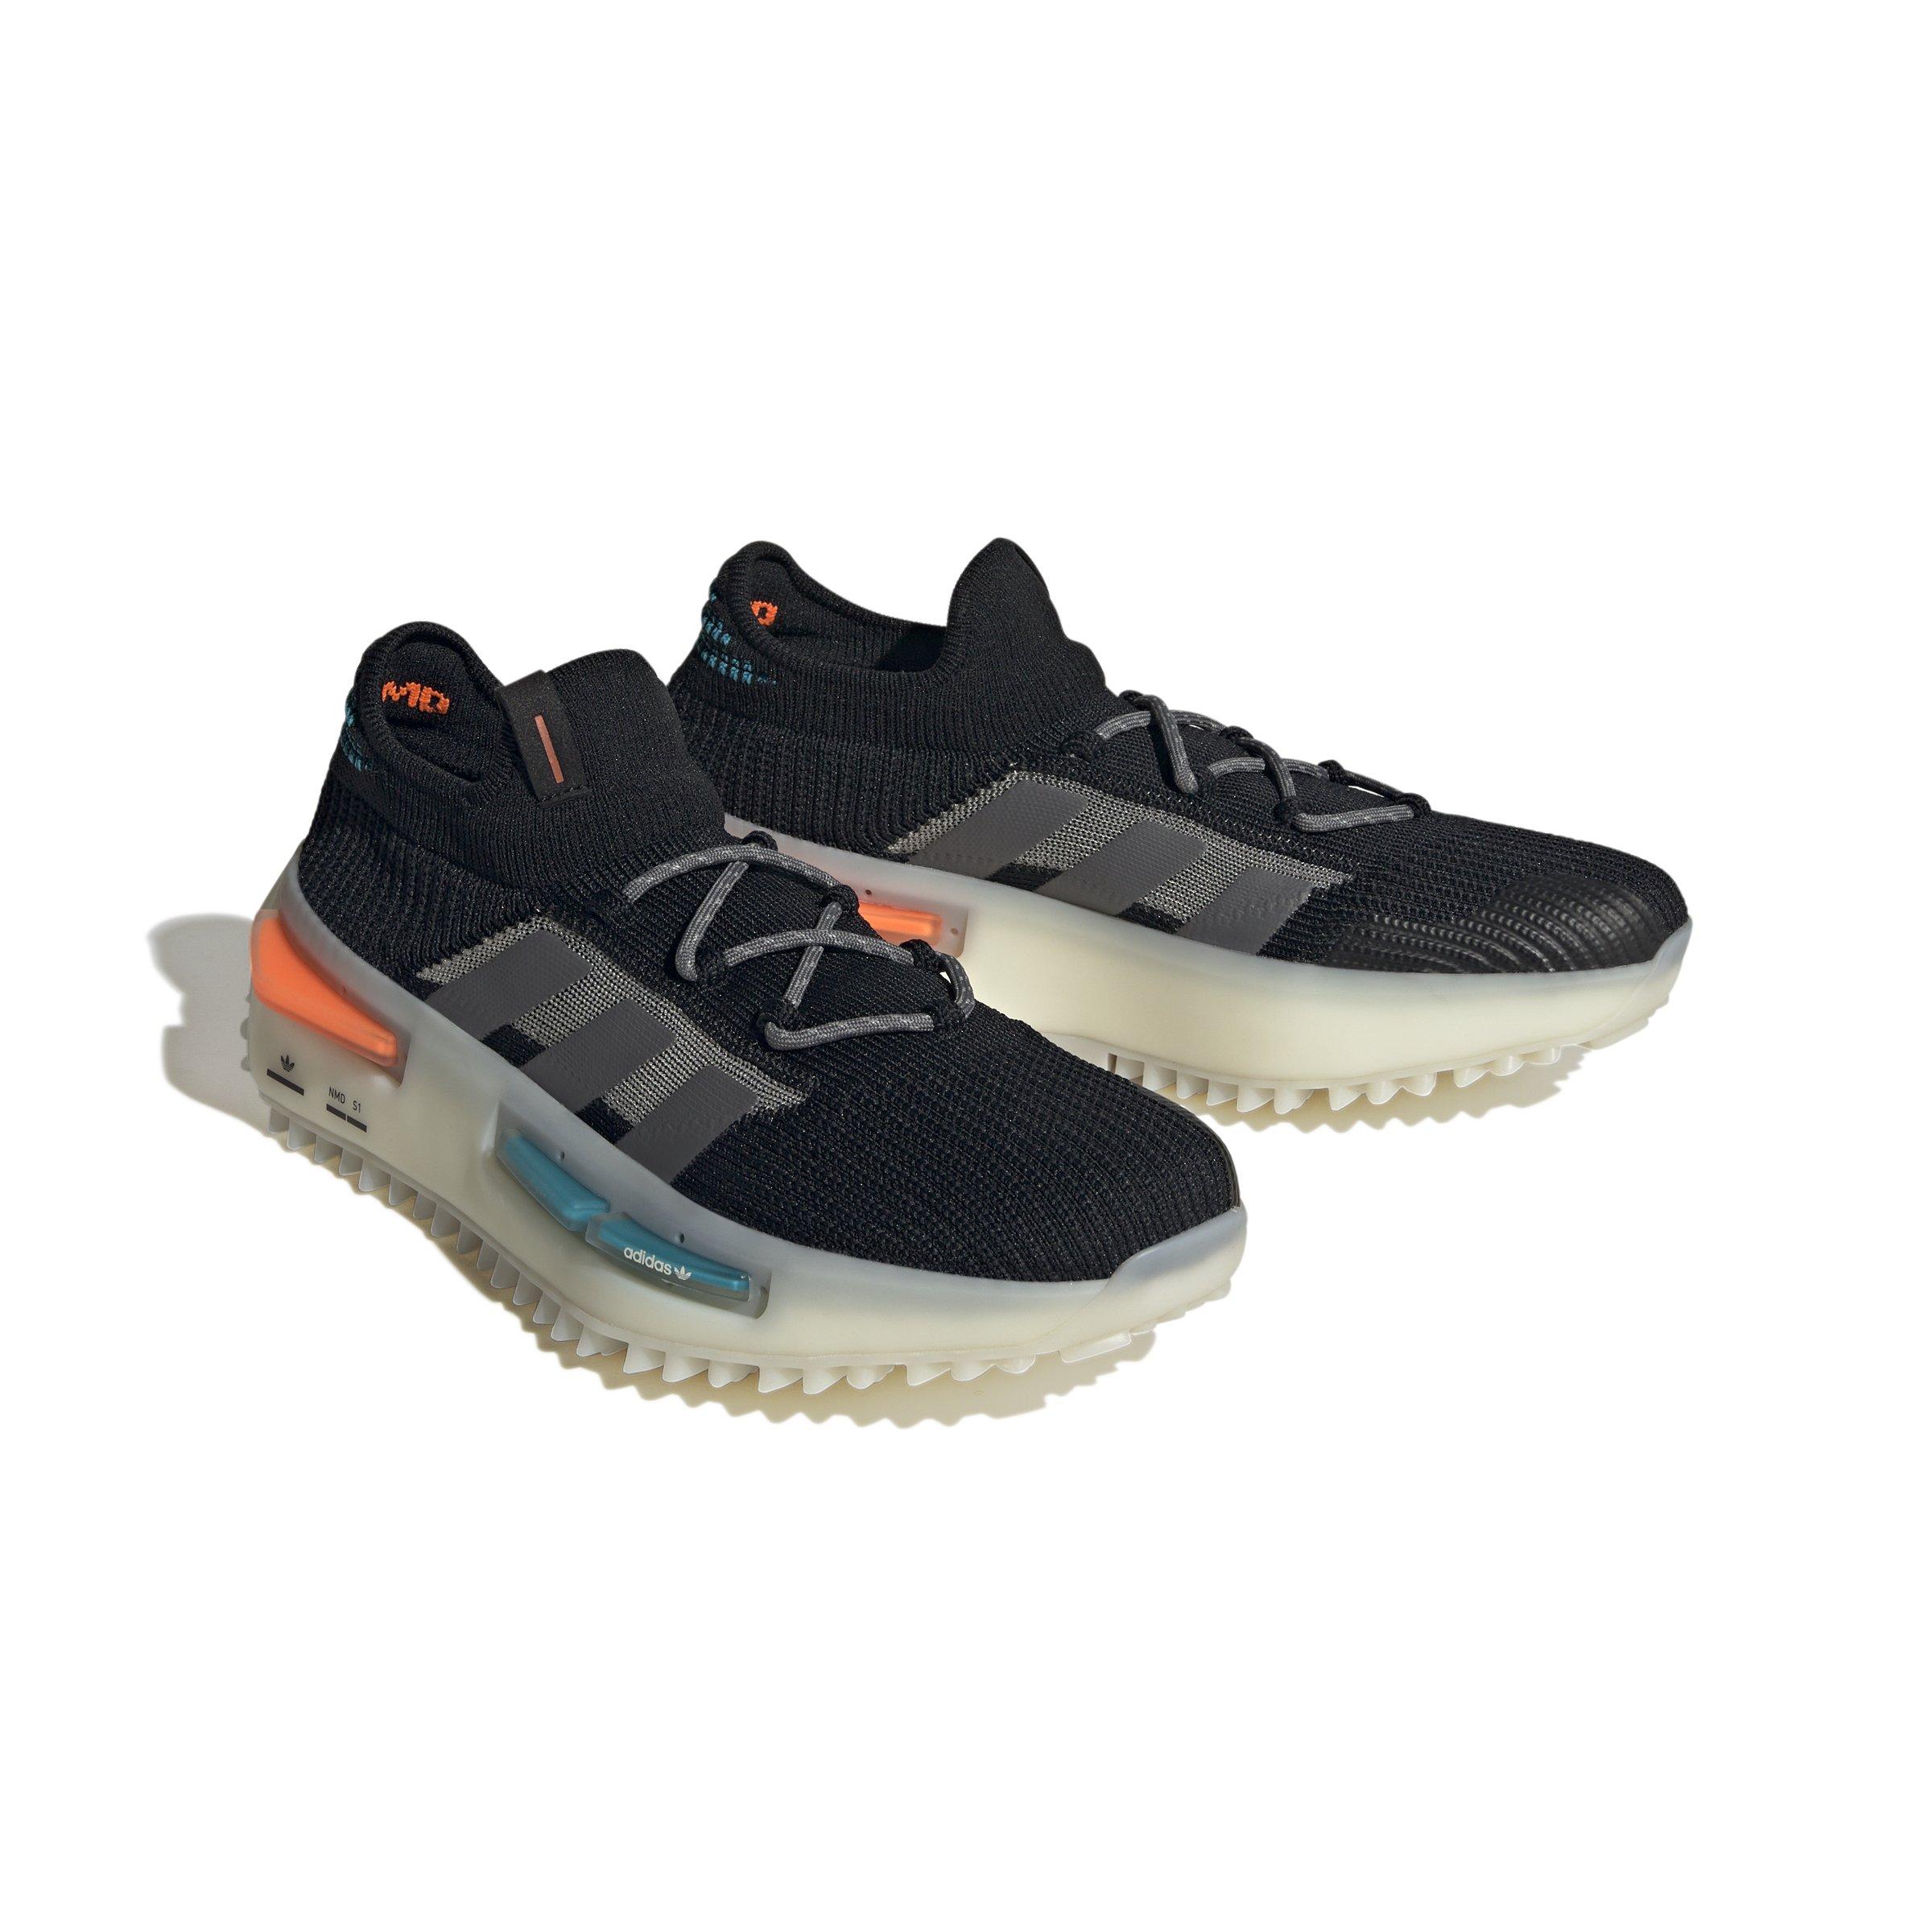 adidas Originals NMD_S1 "Black Teal Orange" Men's Shoe Hibbett | City Gear